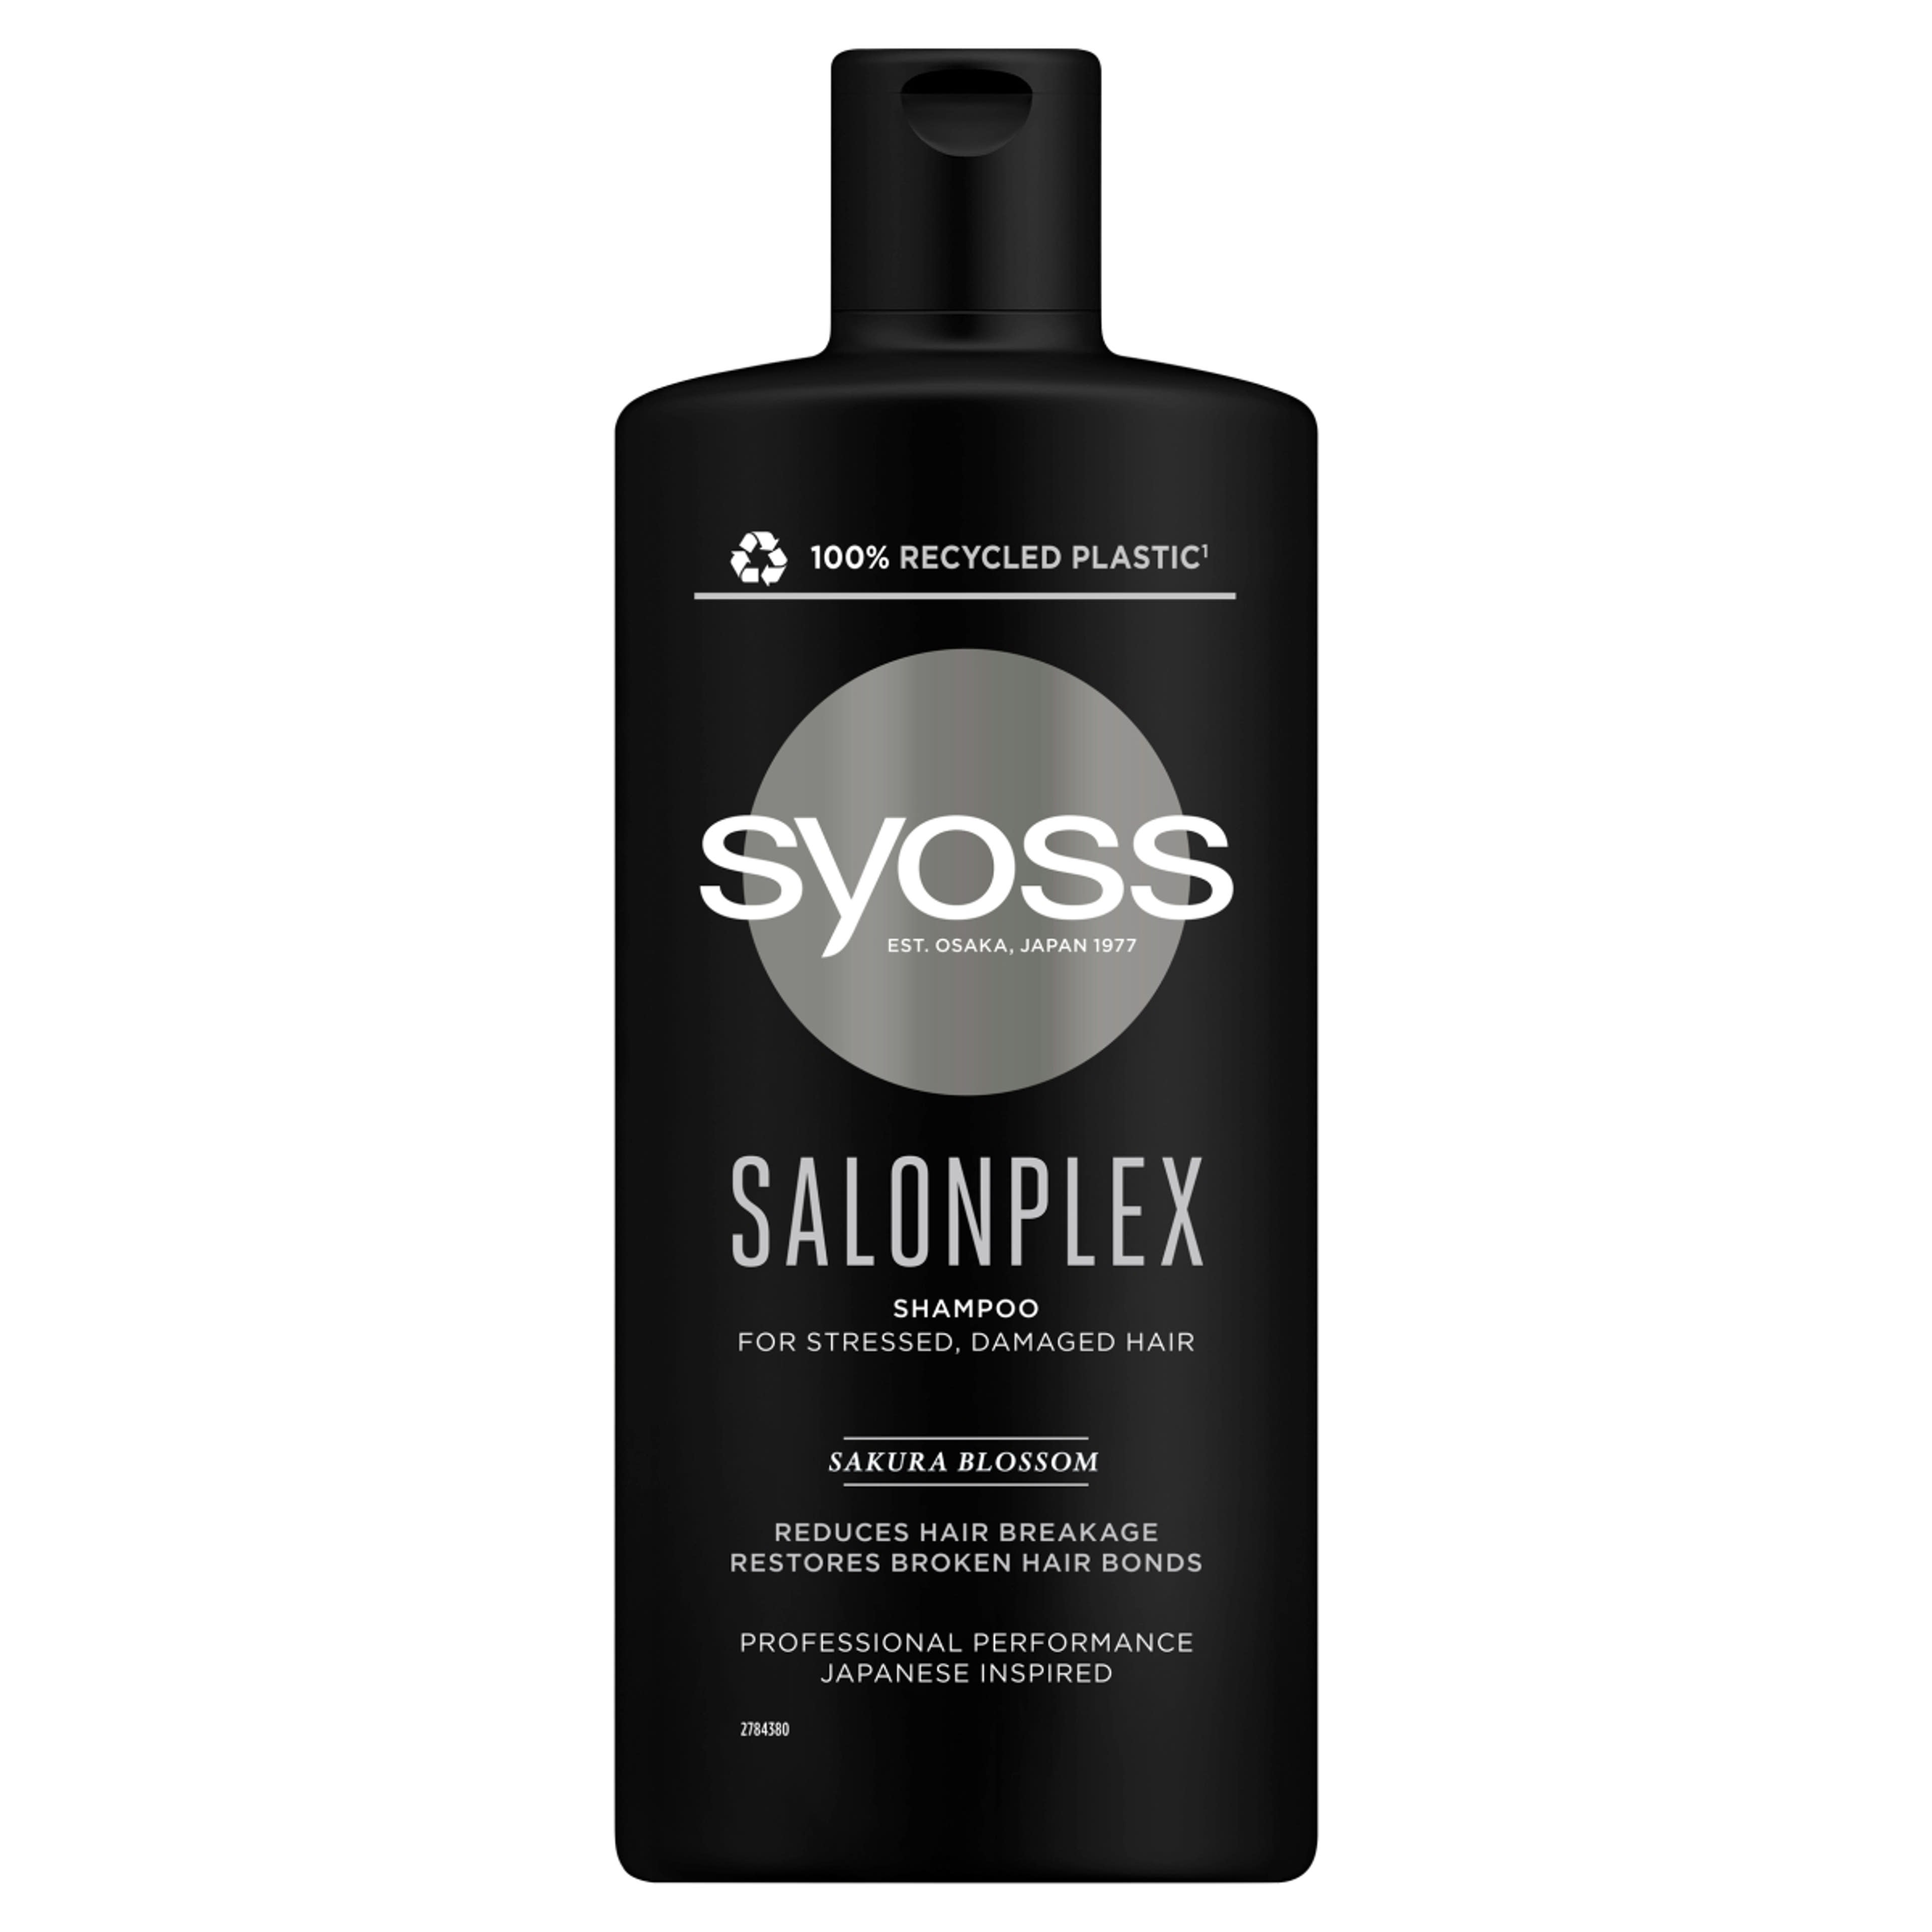 Syoss sampon salonplex - 440 ml